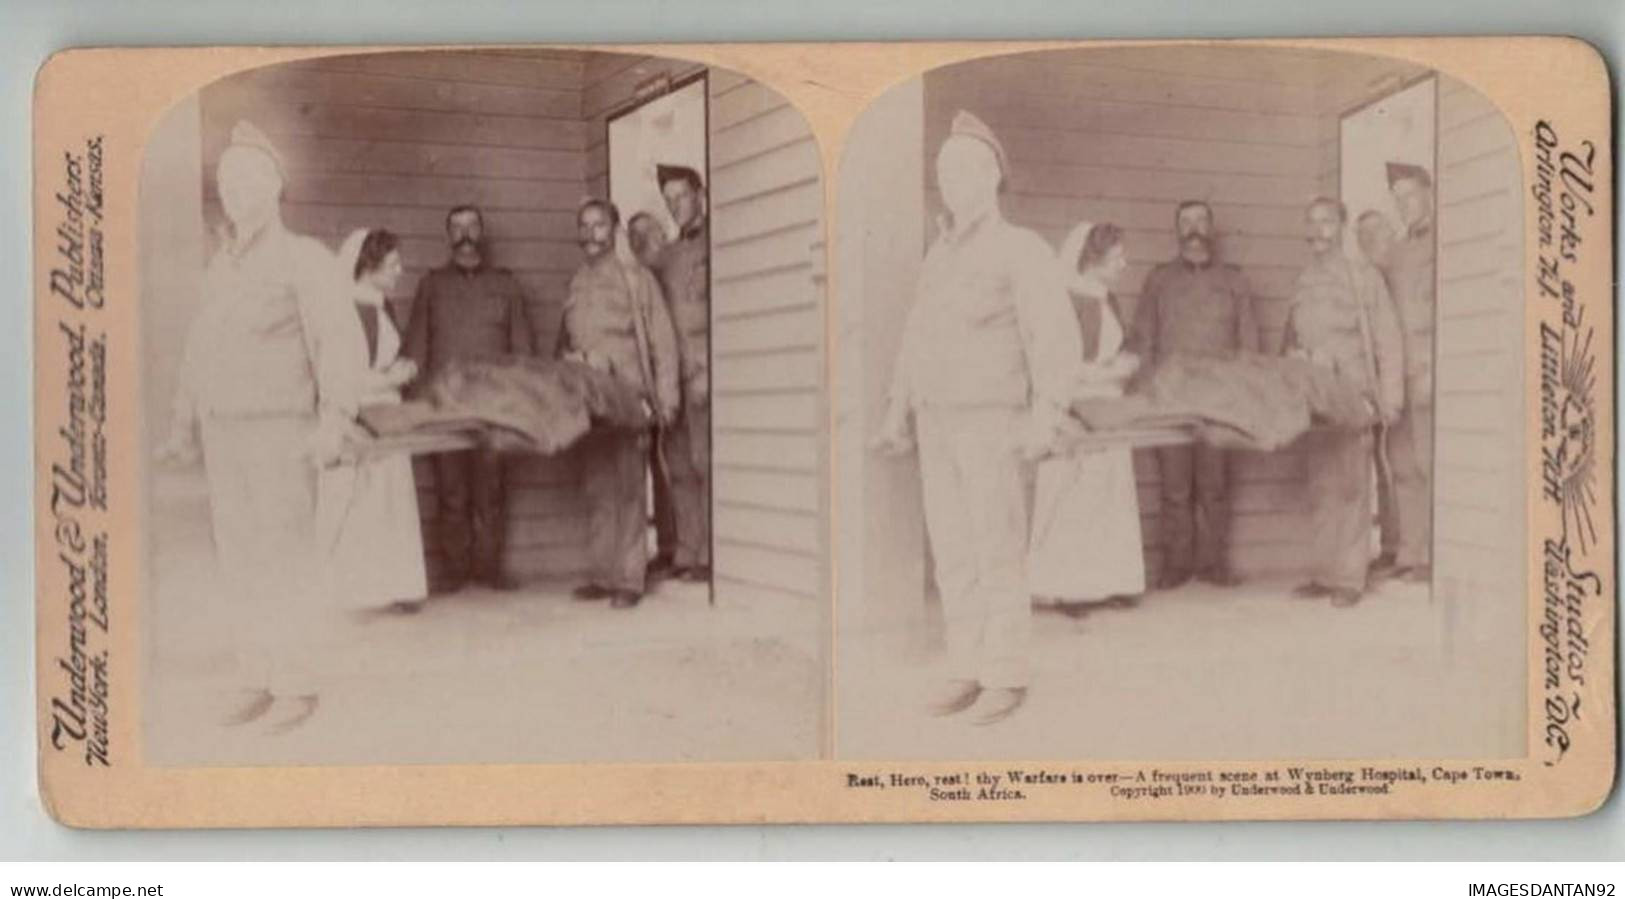 AFRIQUE DU SUD  #PP1313 WYNBERG HOSPITAL HOPITAL CAPE TOWN GUERRE WAR BOER TRANSVAAL 1900 - Stereo-Photographie